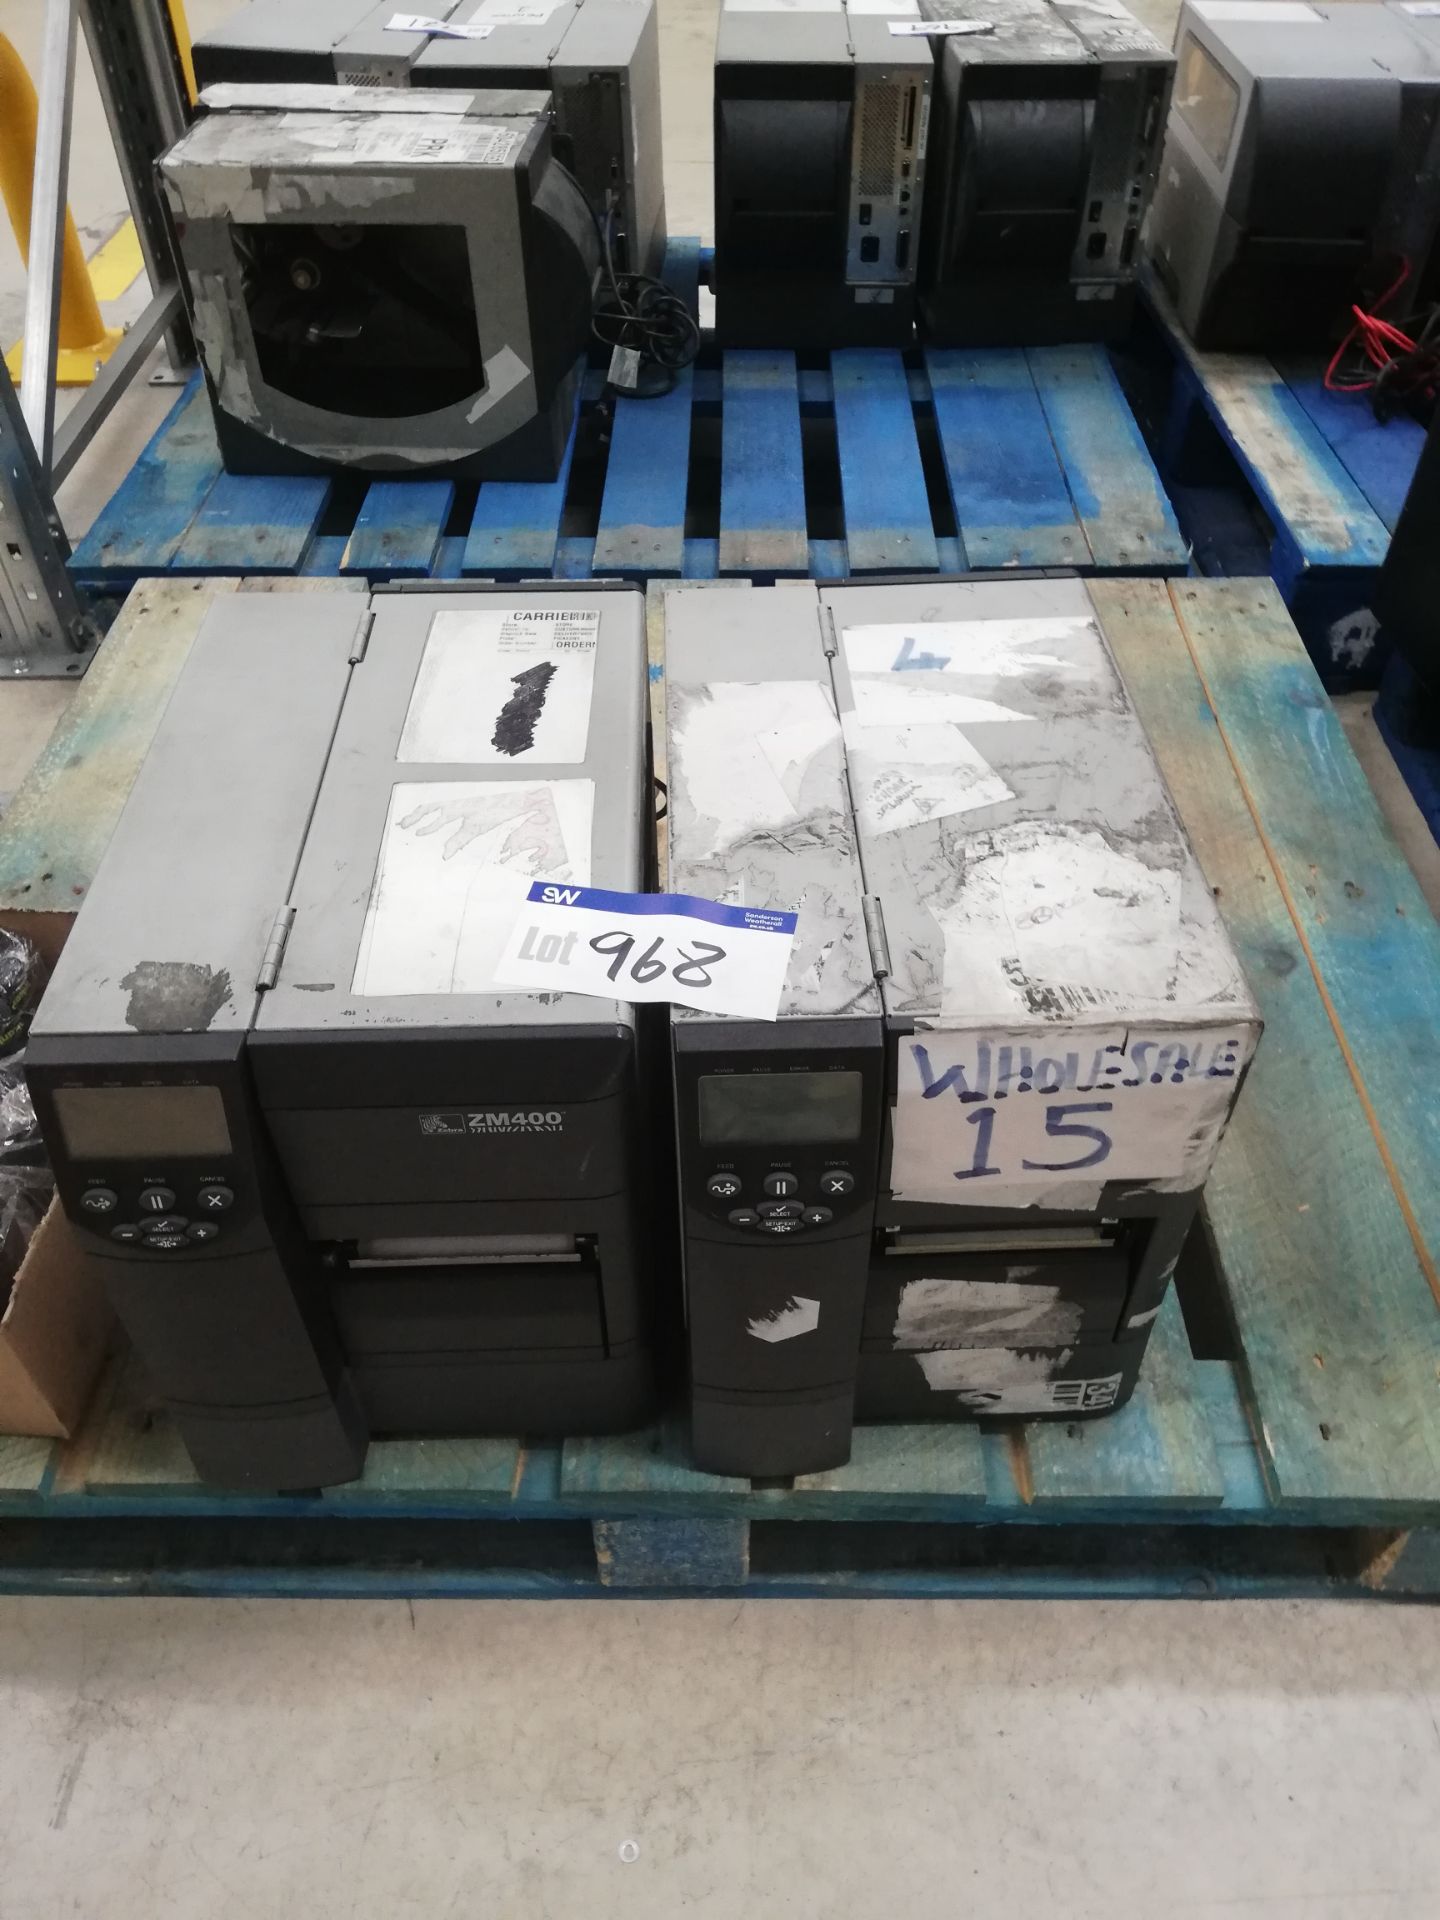 2 x Zebra ZM400 Label Printers